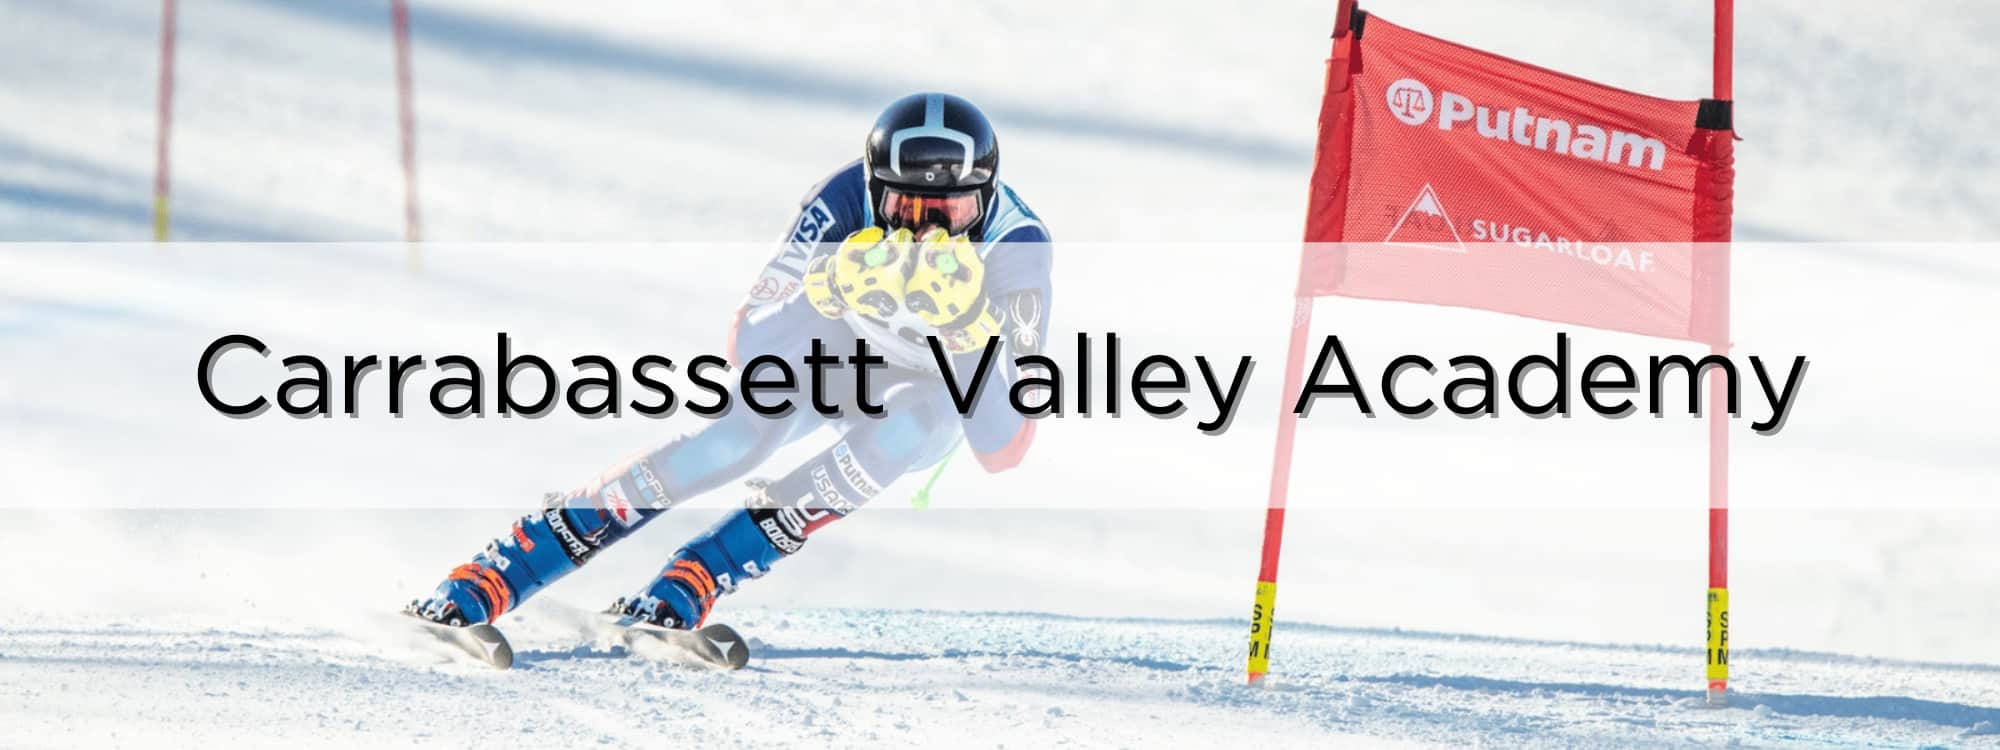 Carrabassett Valley Academy-CVA-Ski racer carving around a gate at Sugarloaf, Maine.